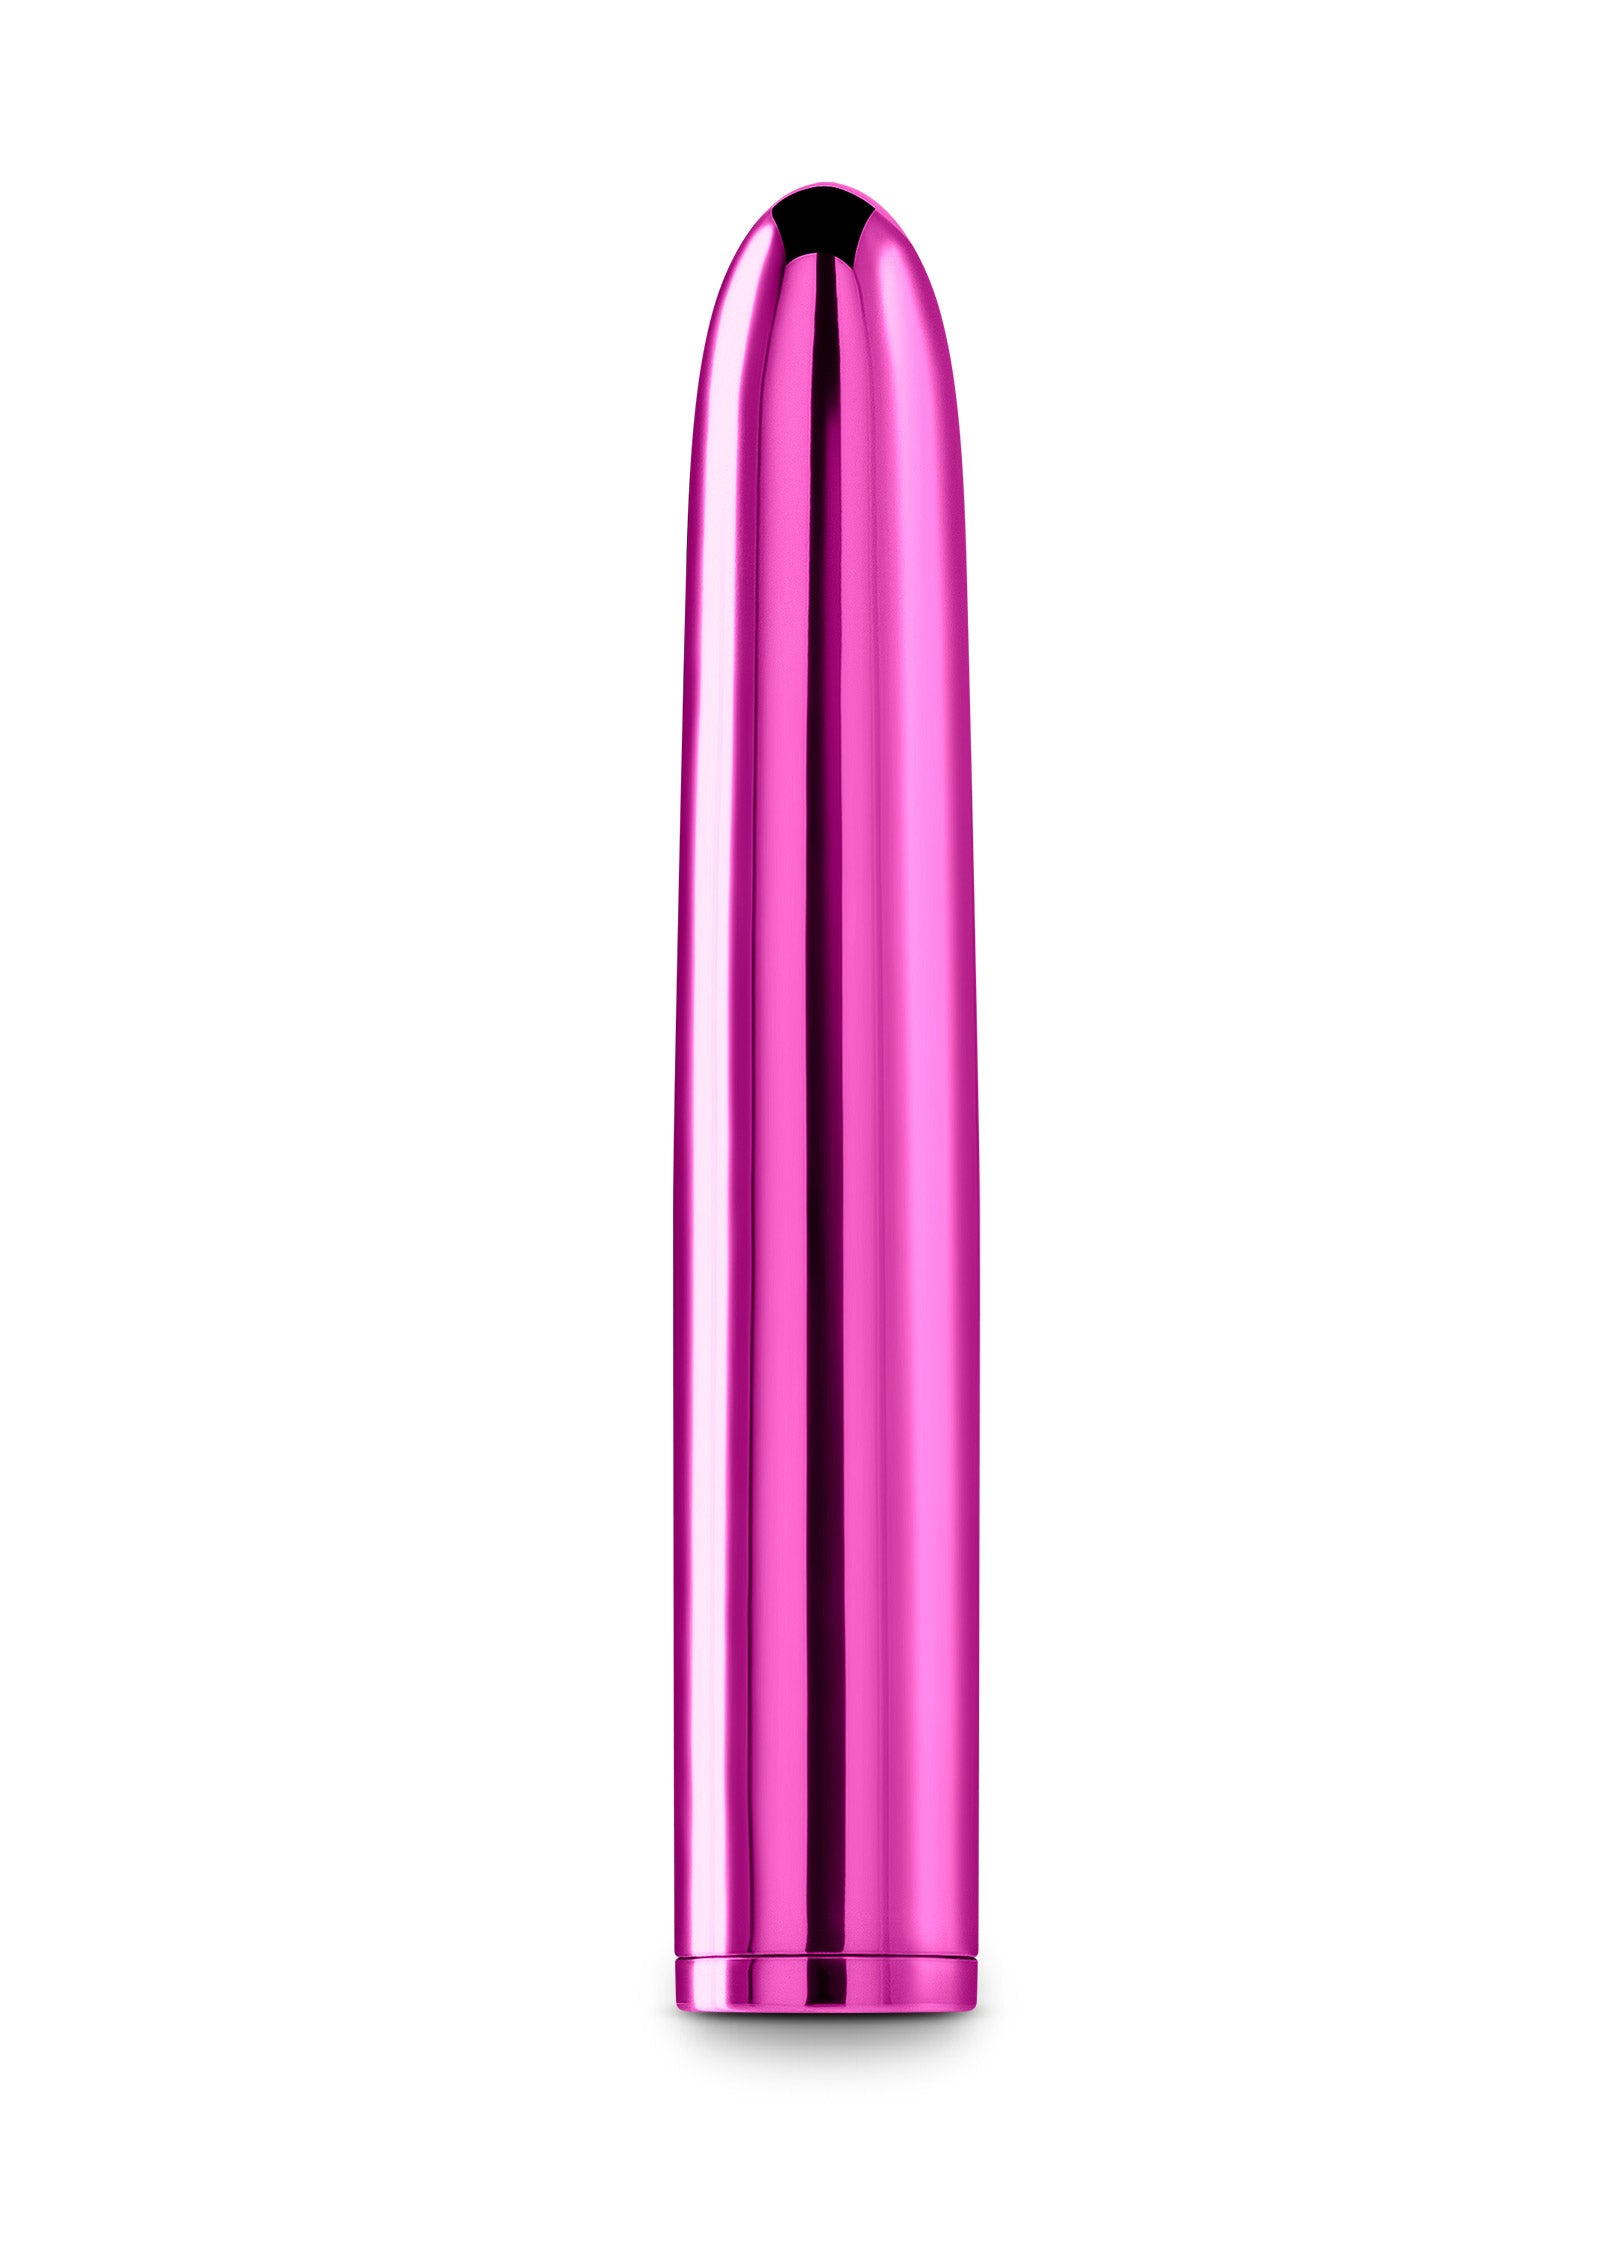 Chroma - 7 Inch Vibrator Pink